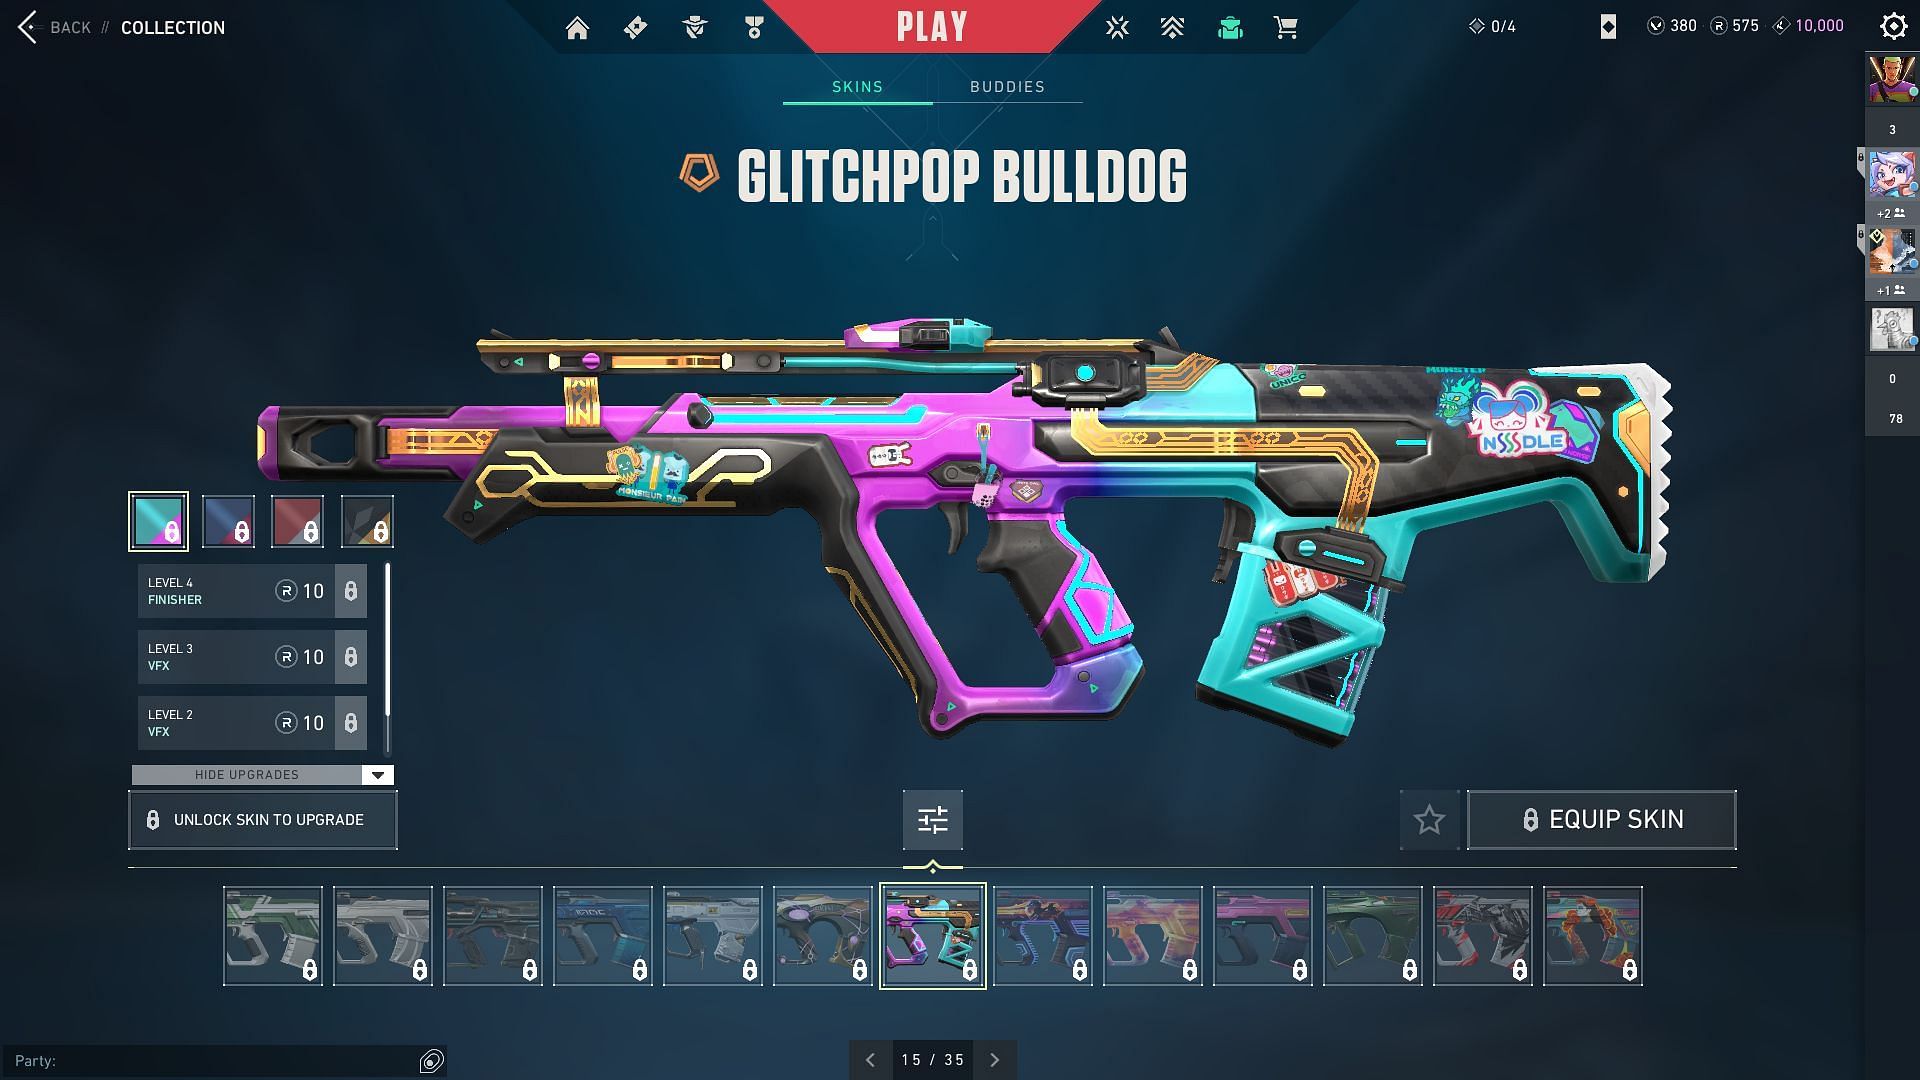 Glitchpop Bulldog (Image via Riot Games)